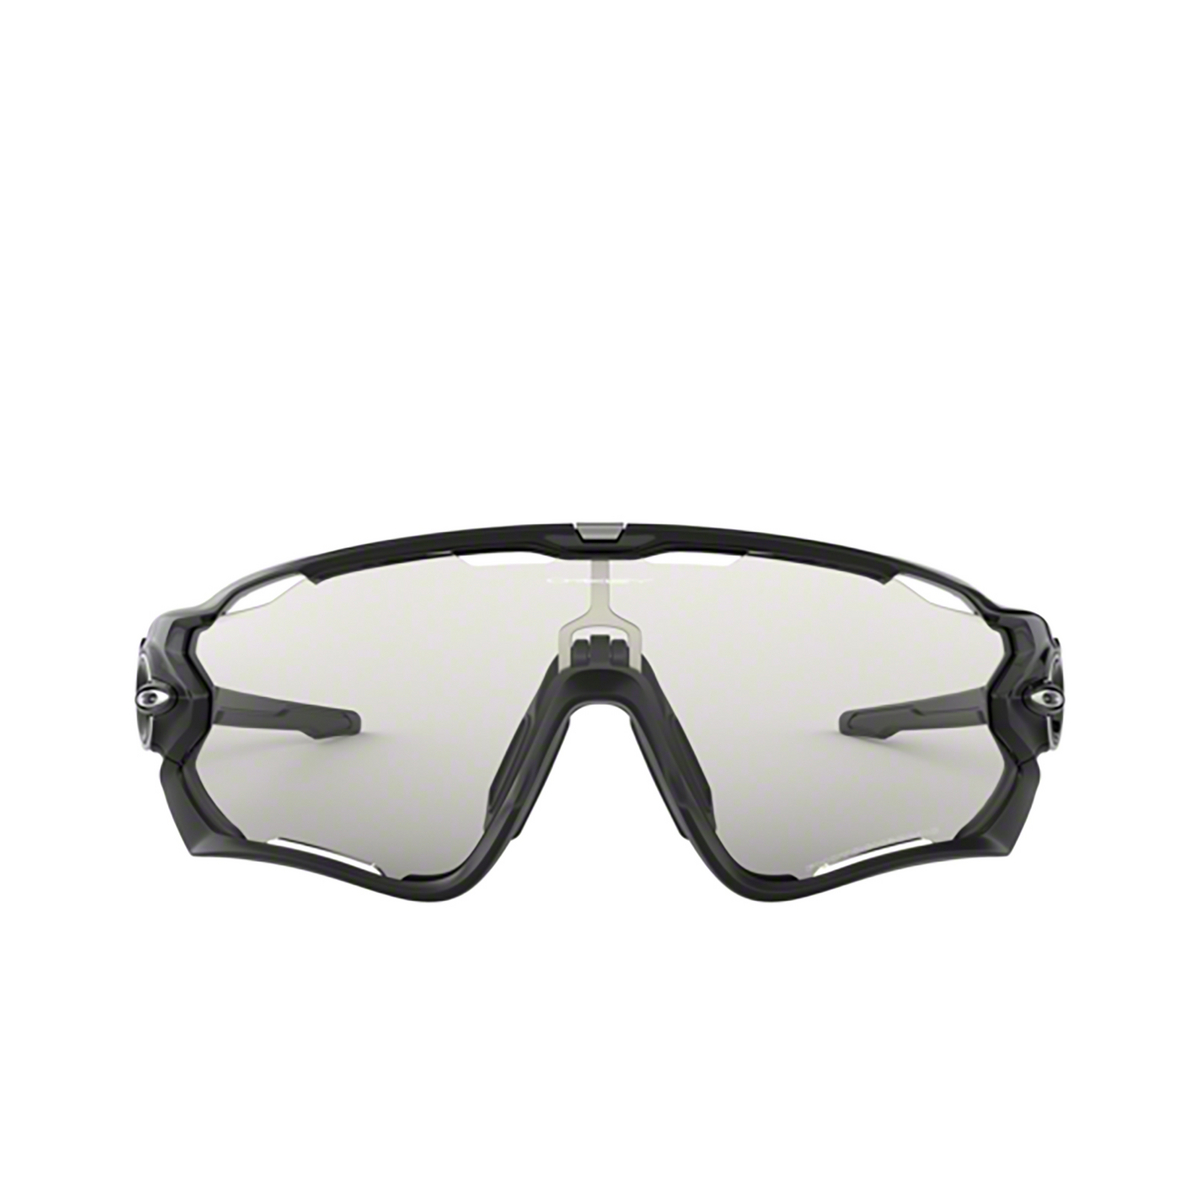 Oakley JAWBREAKER Sunglasses 929014 POLISHED BLACK - front view